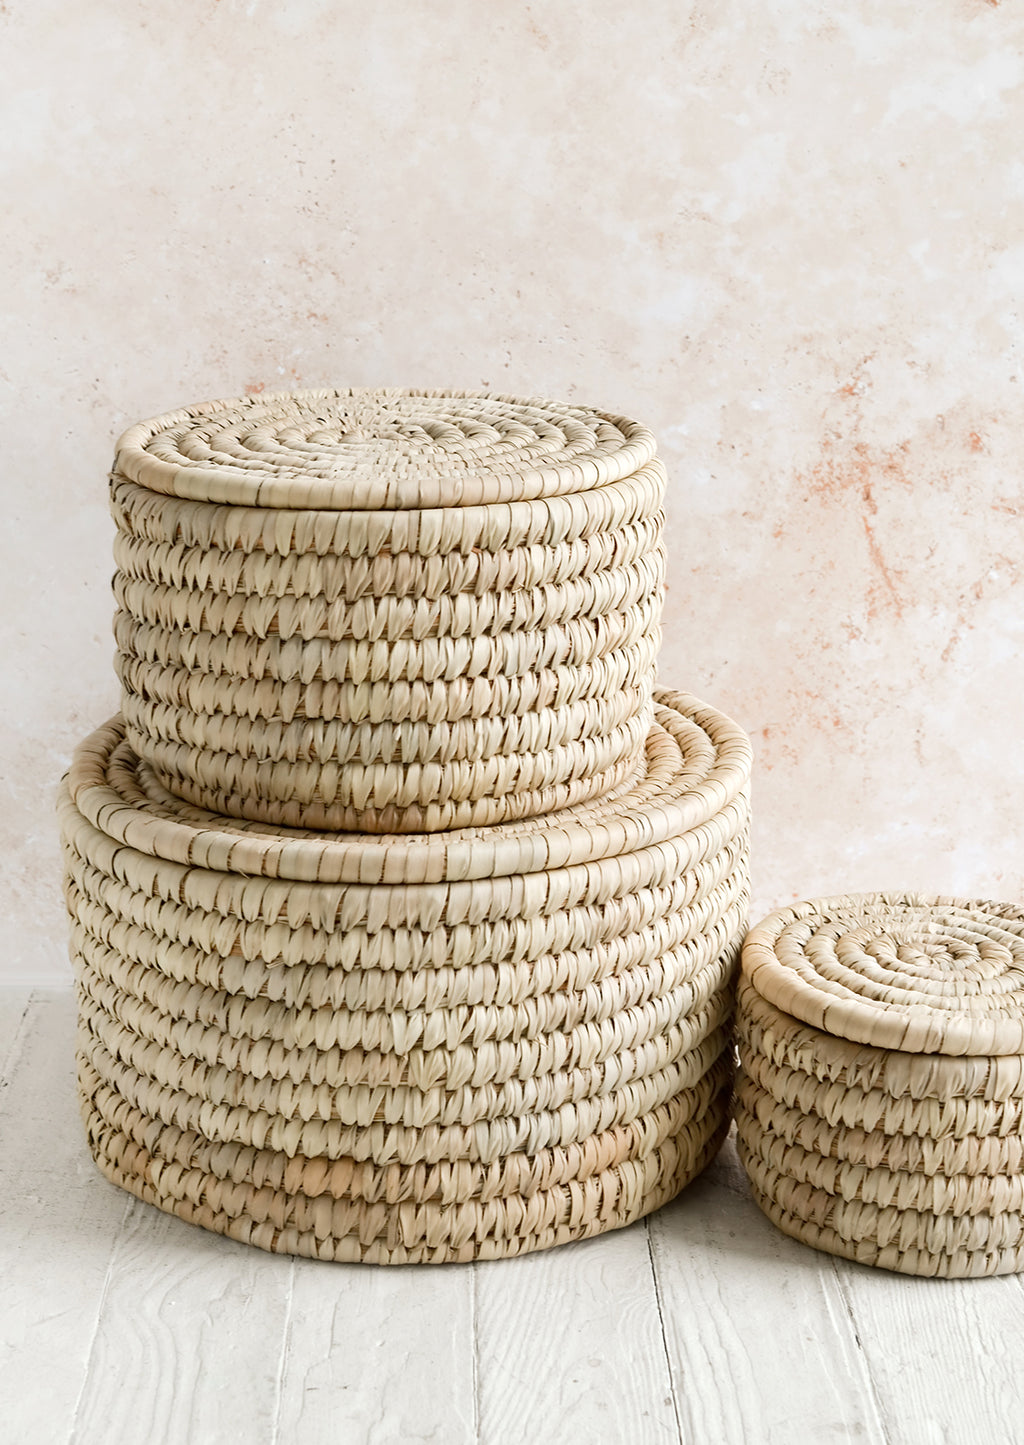 2: Three round, palm leaf storage baskets with lids in incremental sizes.